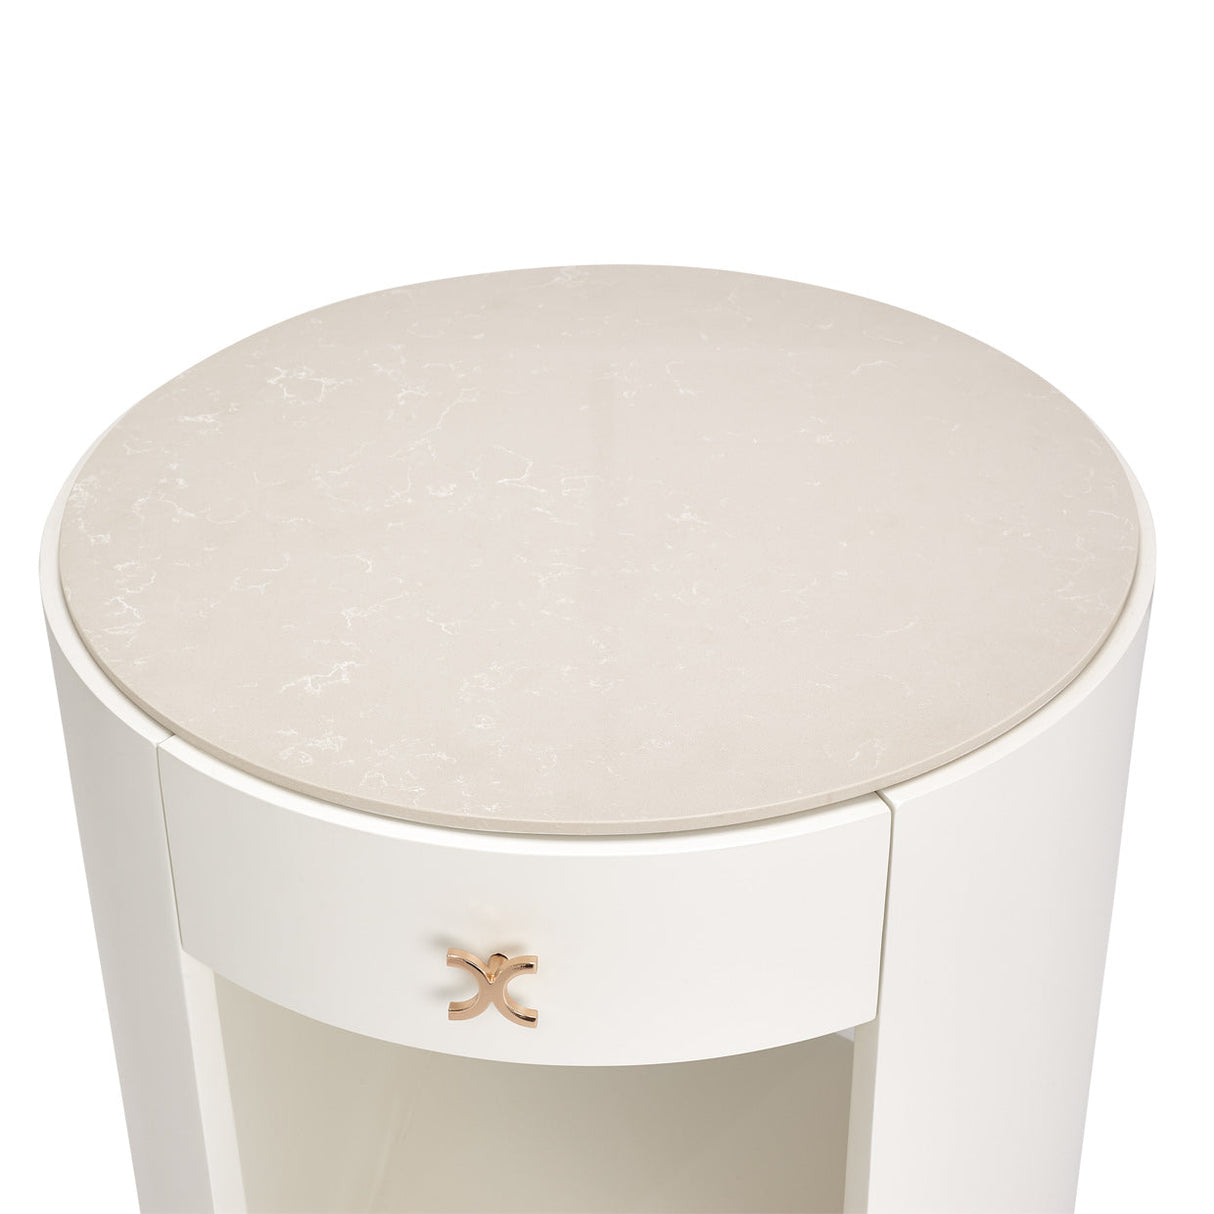 Aico Furniture - La Rachelle Round End Table W/ Marble Top In Medium Champagne - 9034224-136